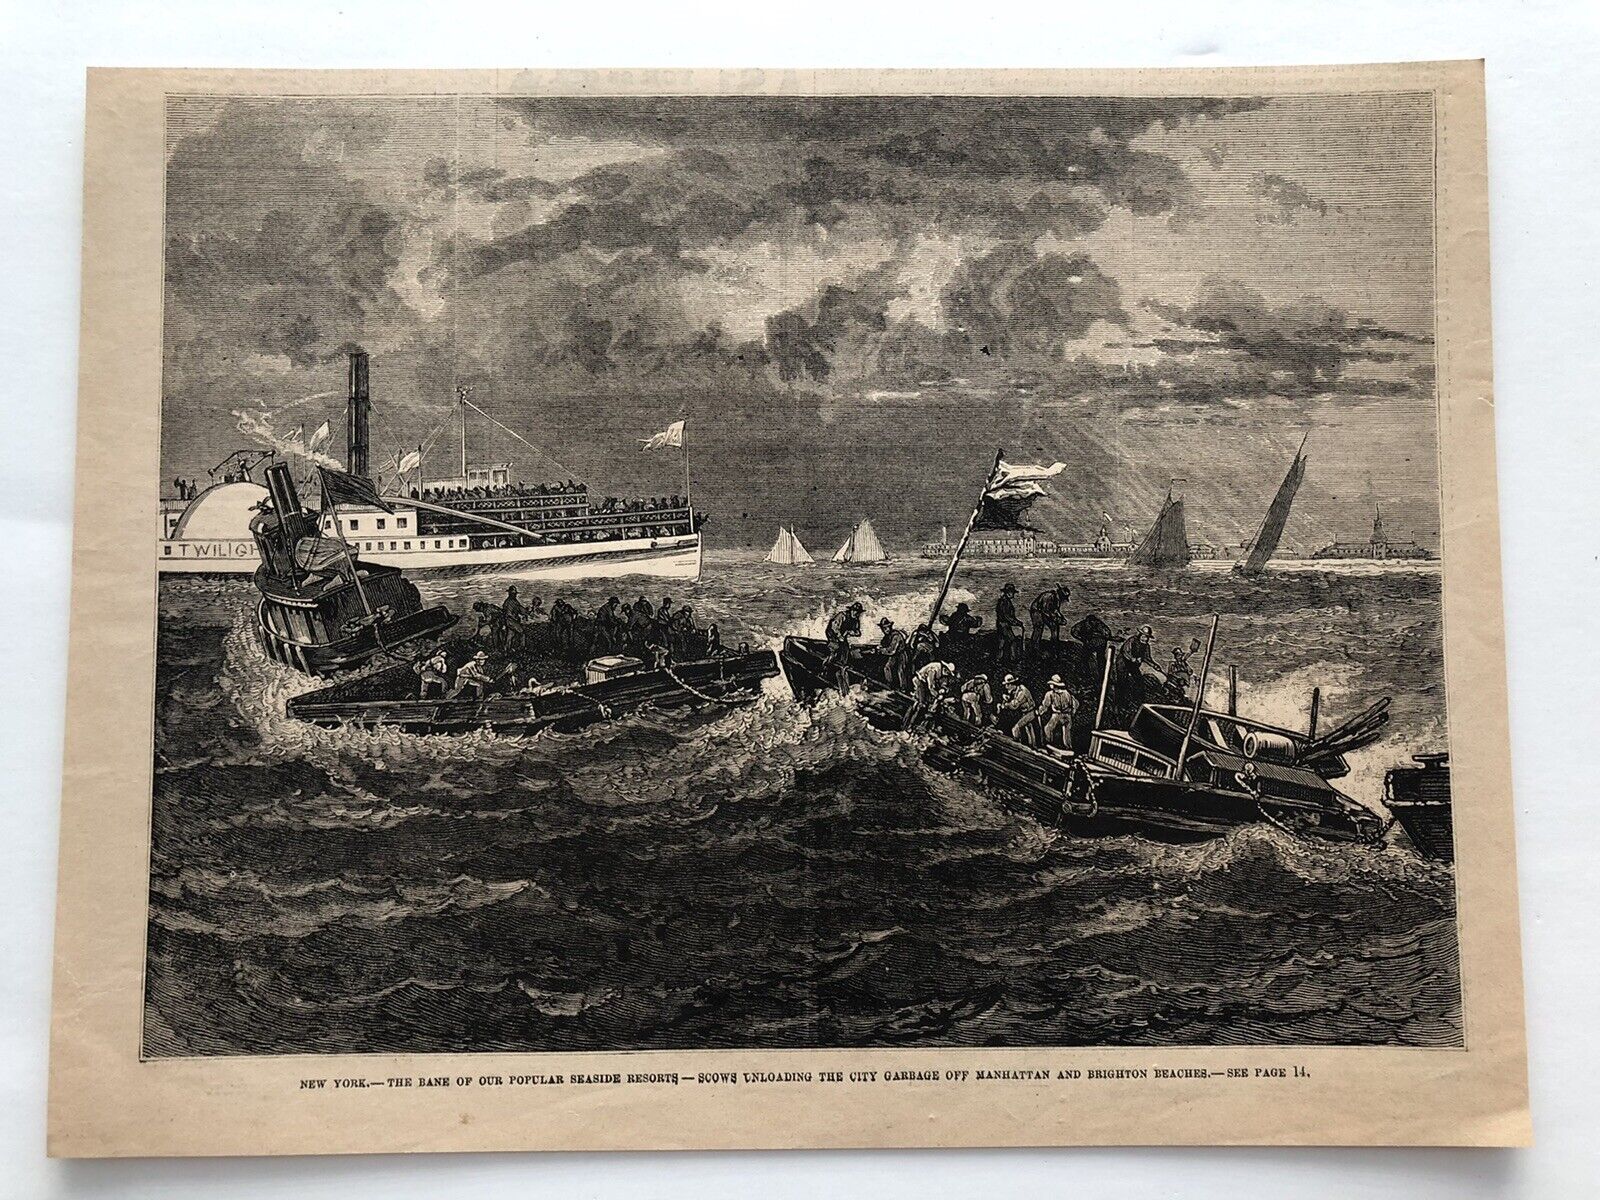 1878 Leslies Antique Print Dumping Garbage Off Manhattan & Brighton Beach 112721